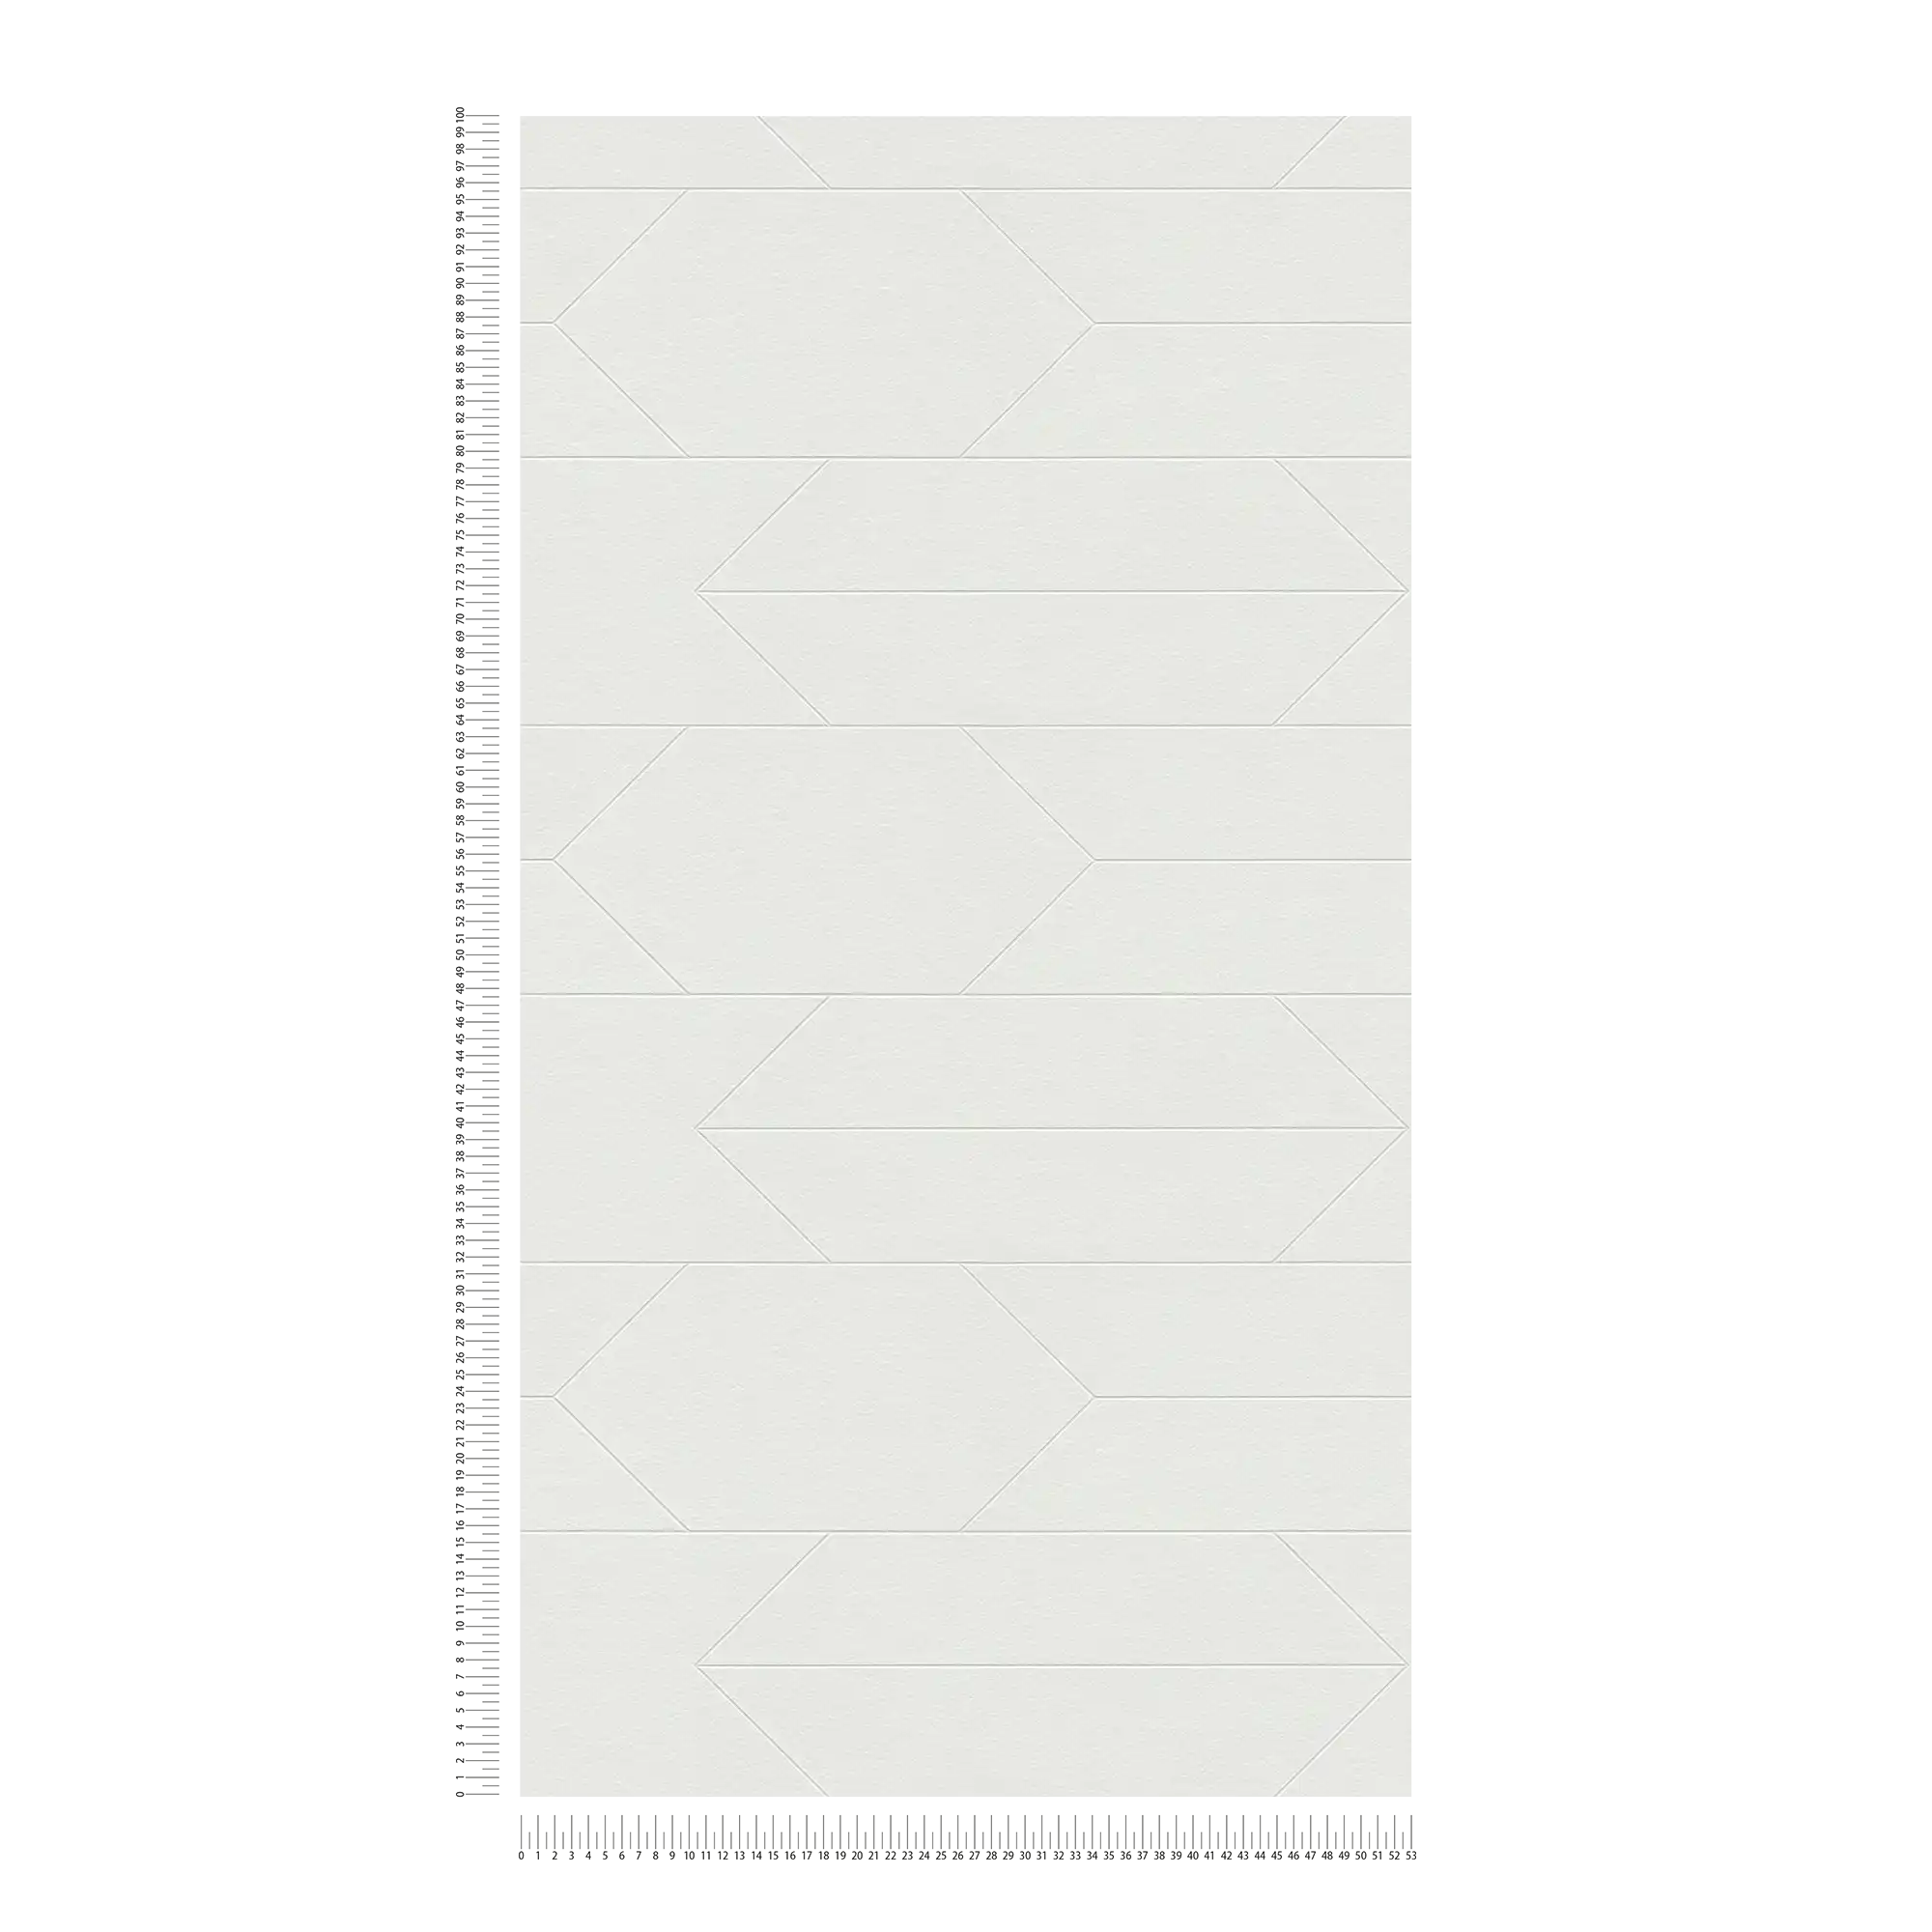             Carta da parati verniciabile con motivo grafico a linee - Paintable
        